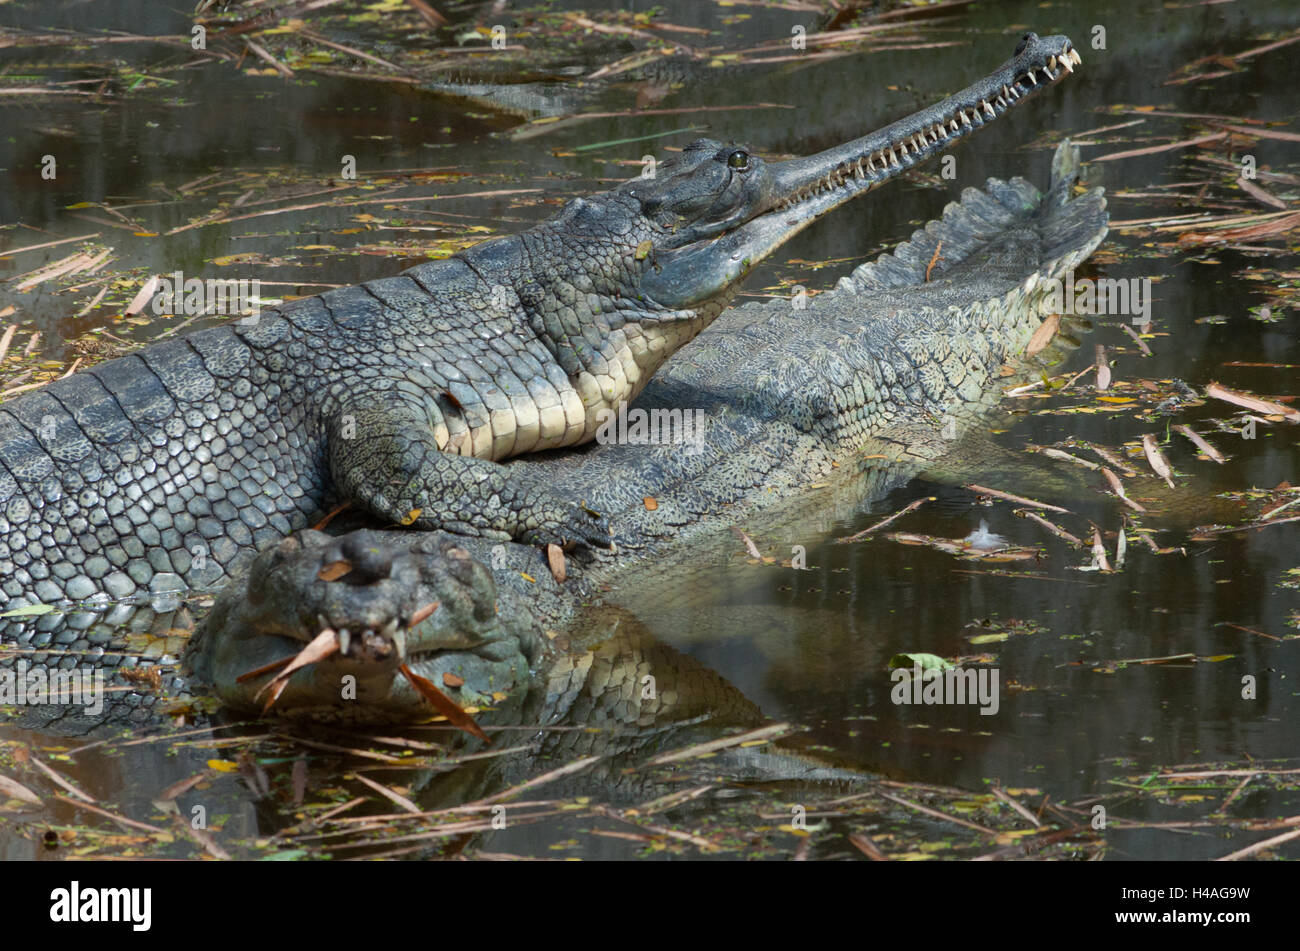 Gharial crocodile Stock Photo